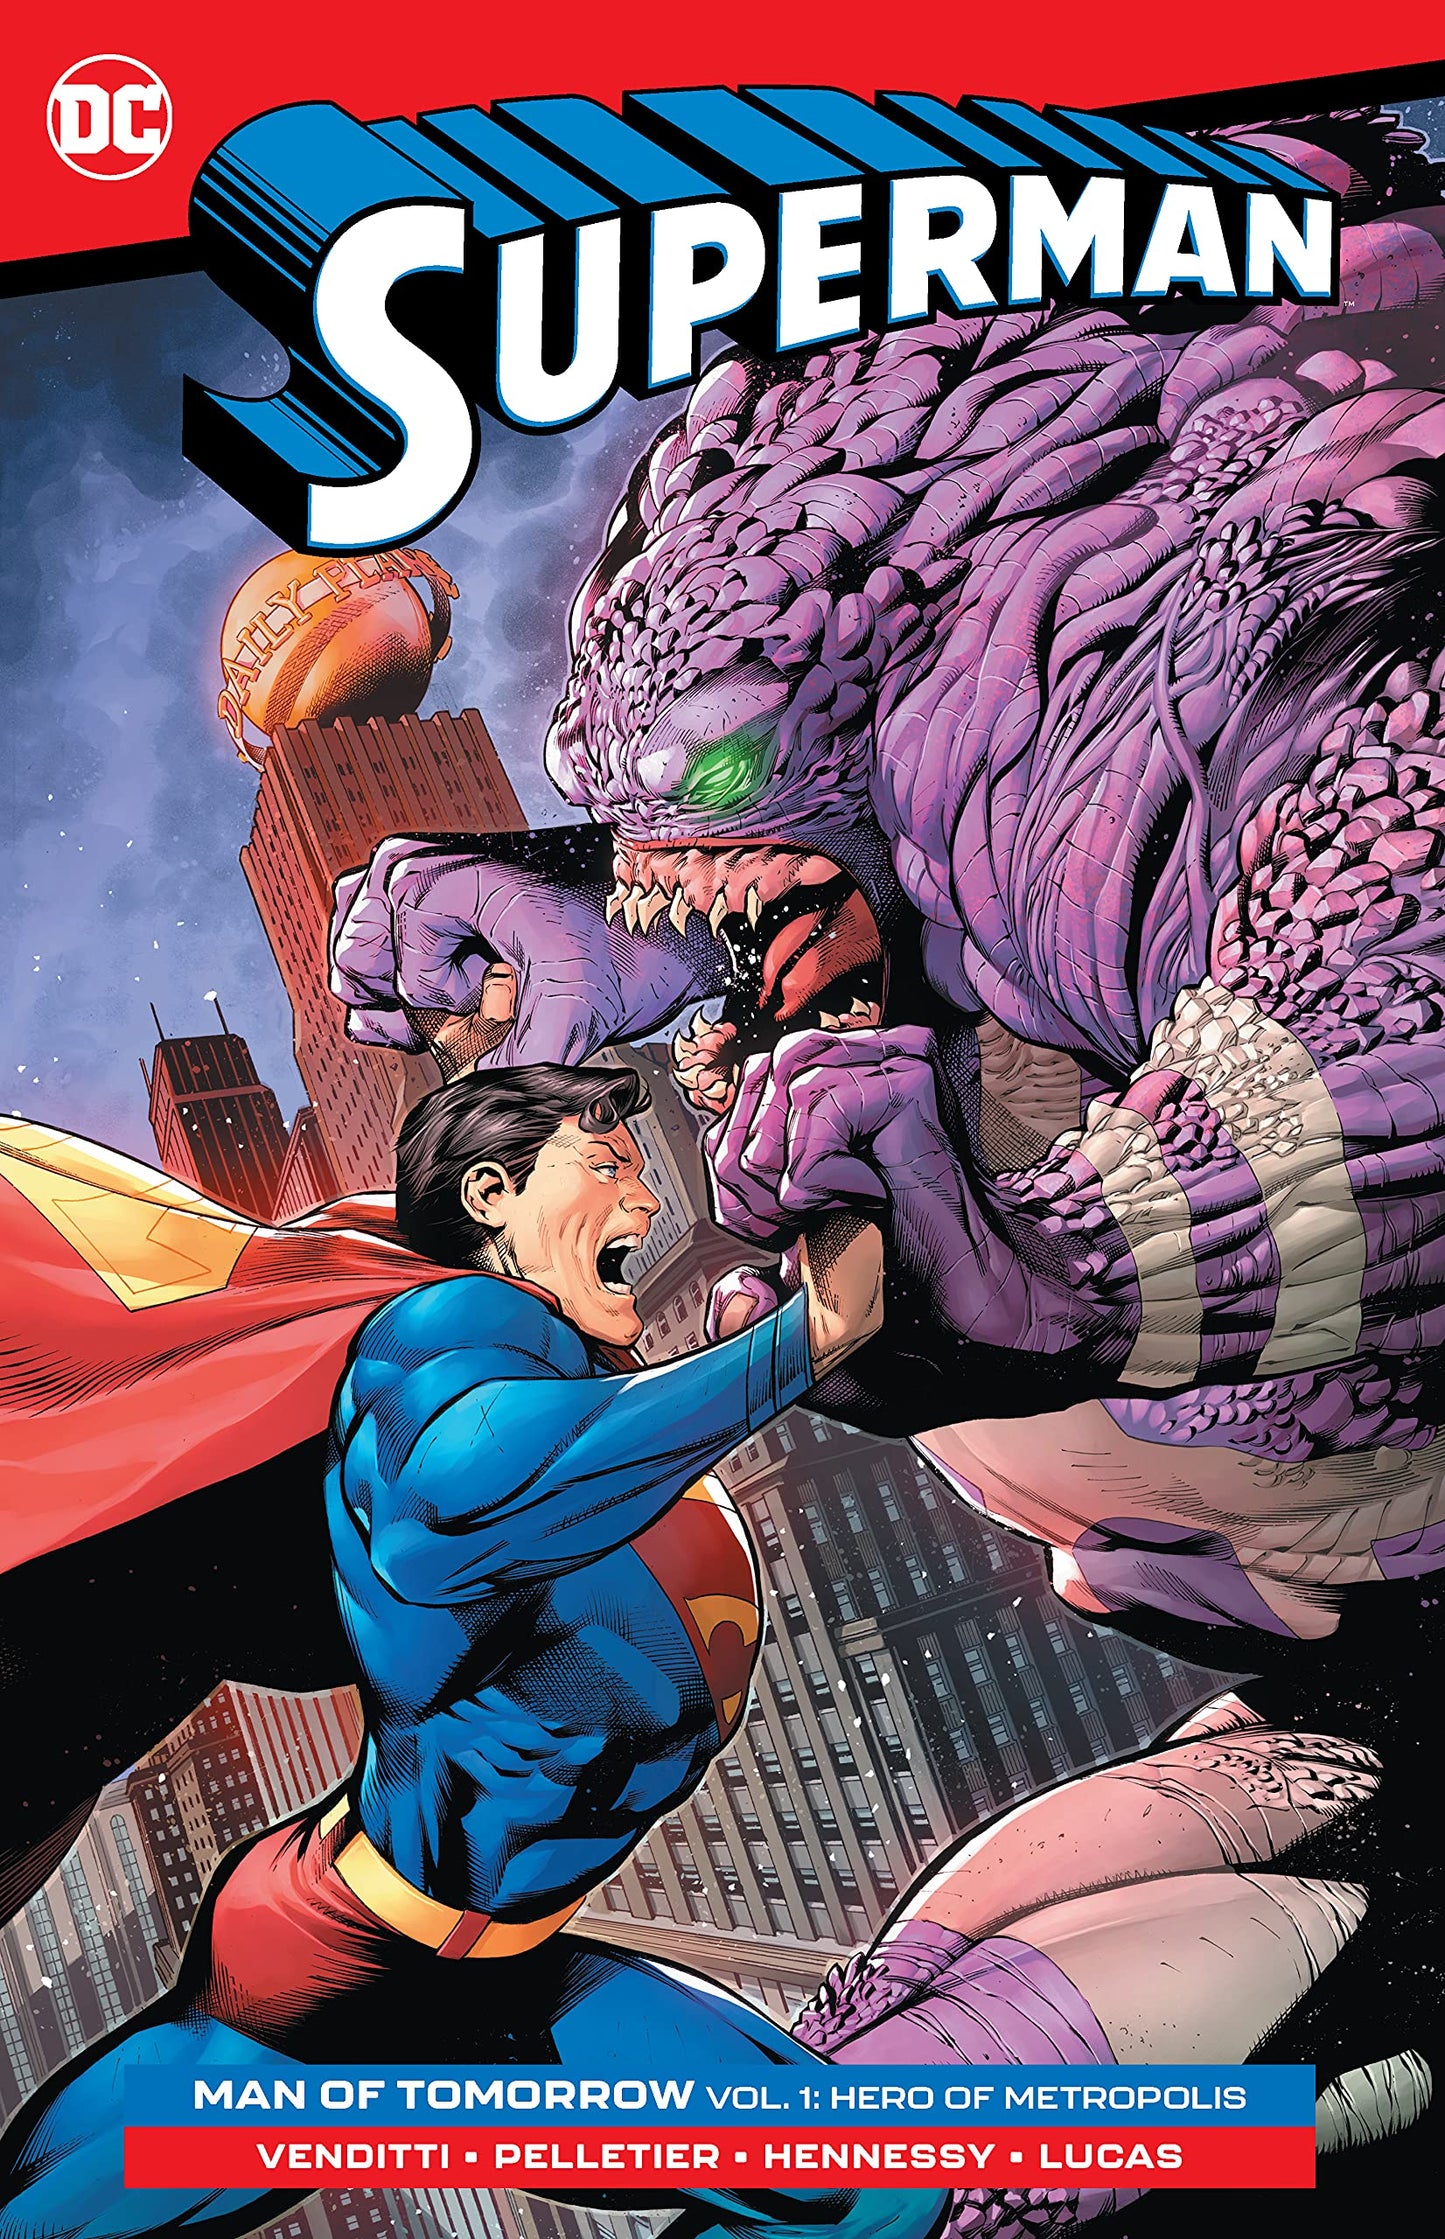 Superman: Man of Tomorrow Vol. 1 DC Comics (Hero of Metropolis)